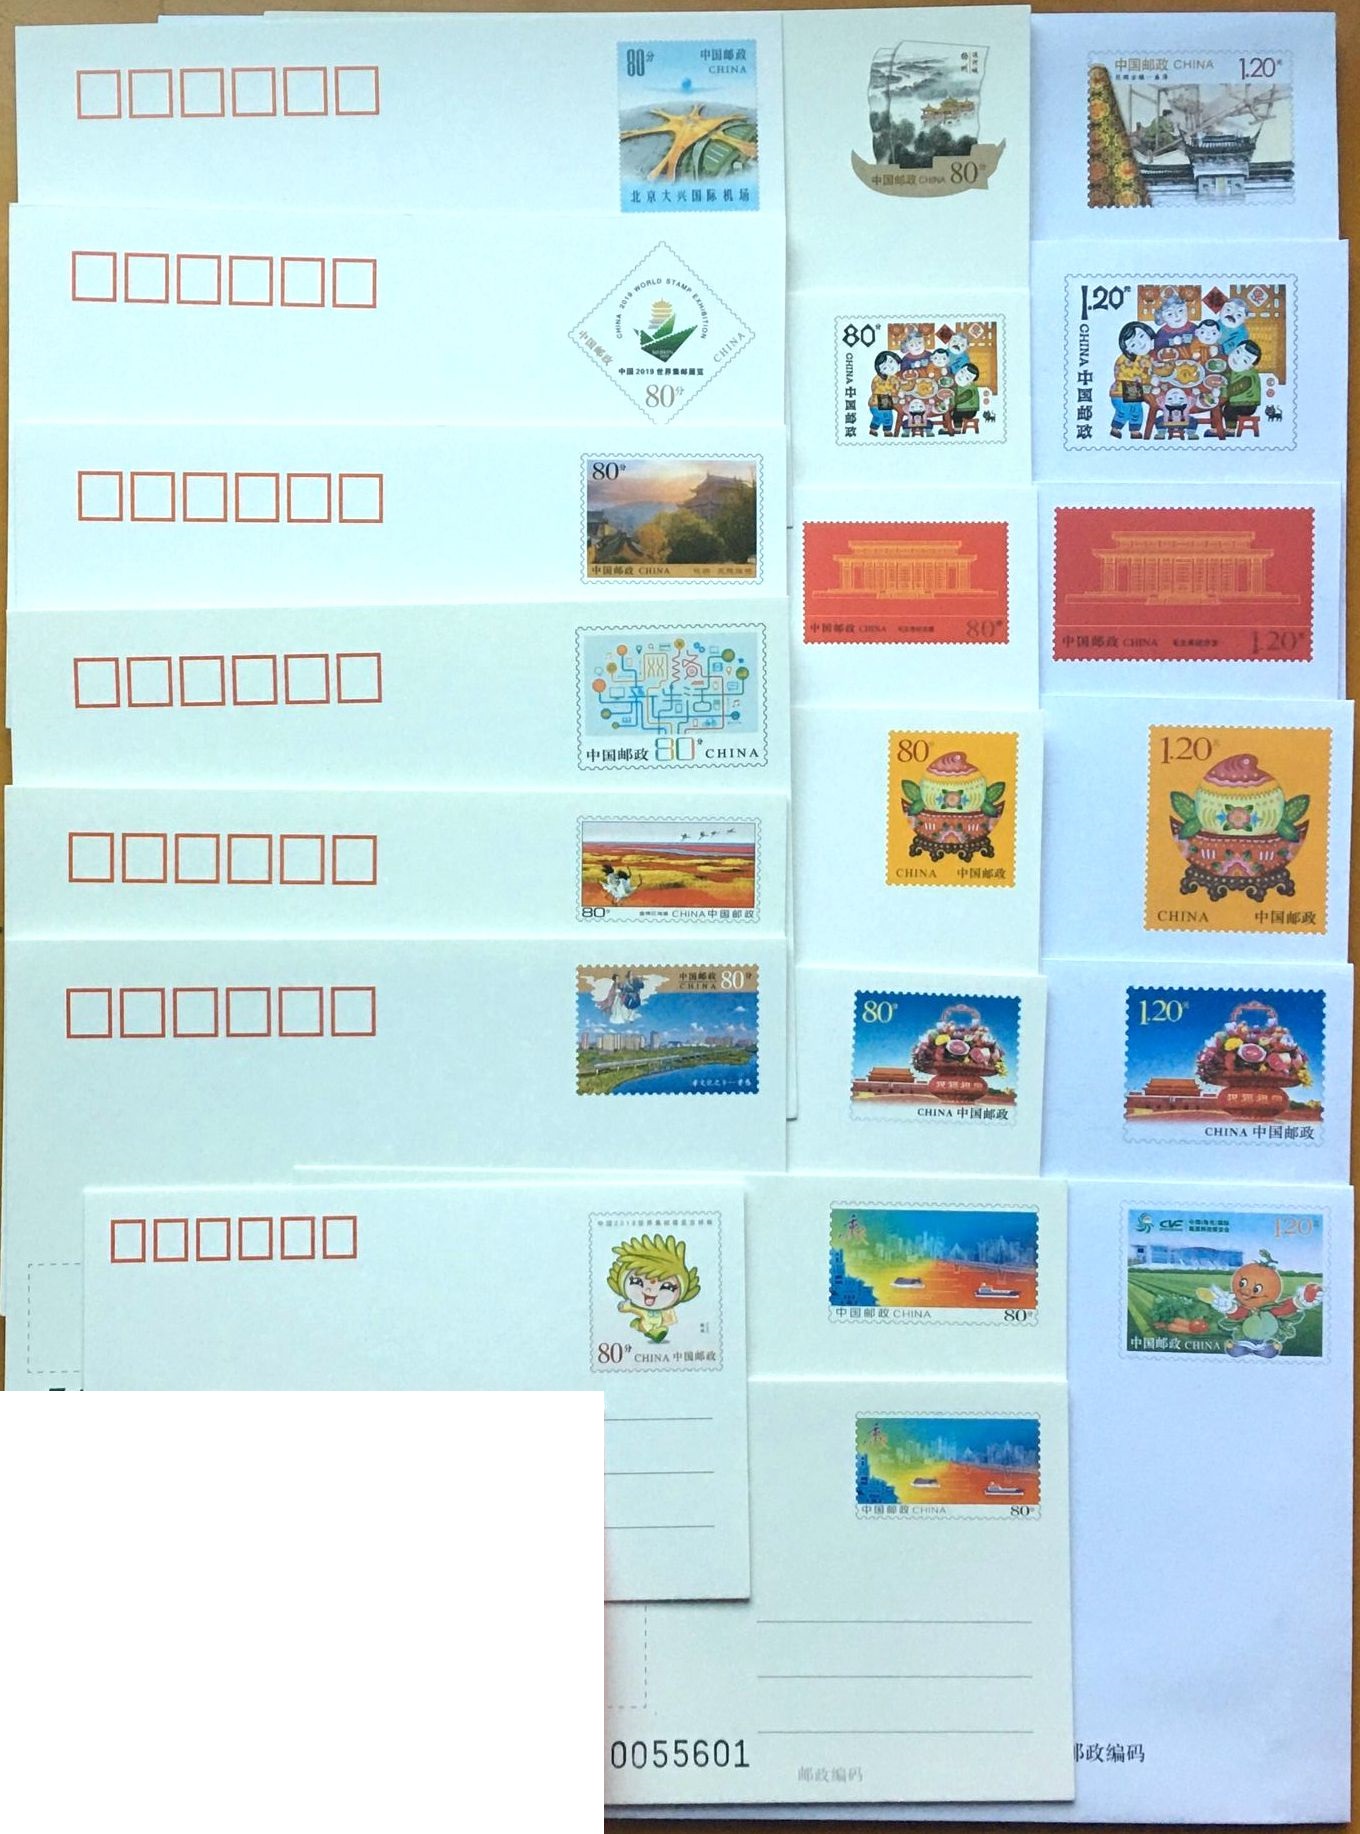 C2053, Complete China 2019 Regular Postal Cards and Envelopes, 20 pcs